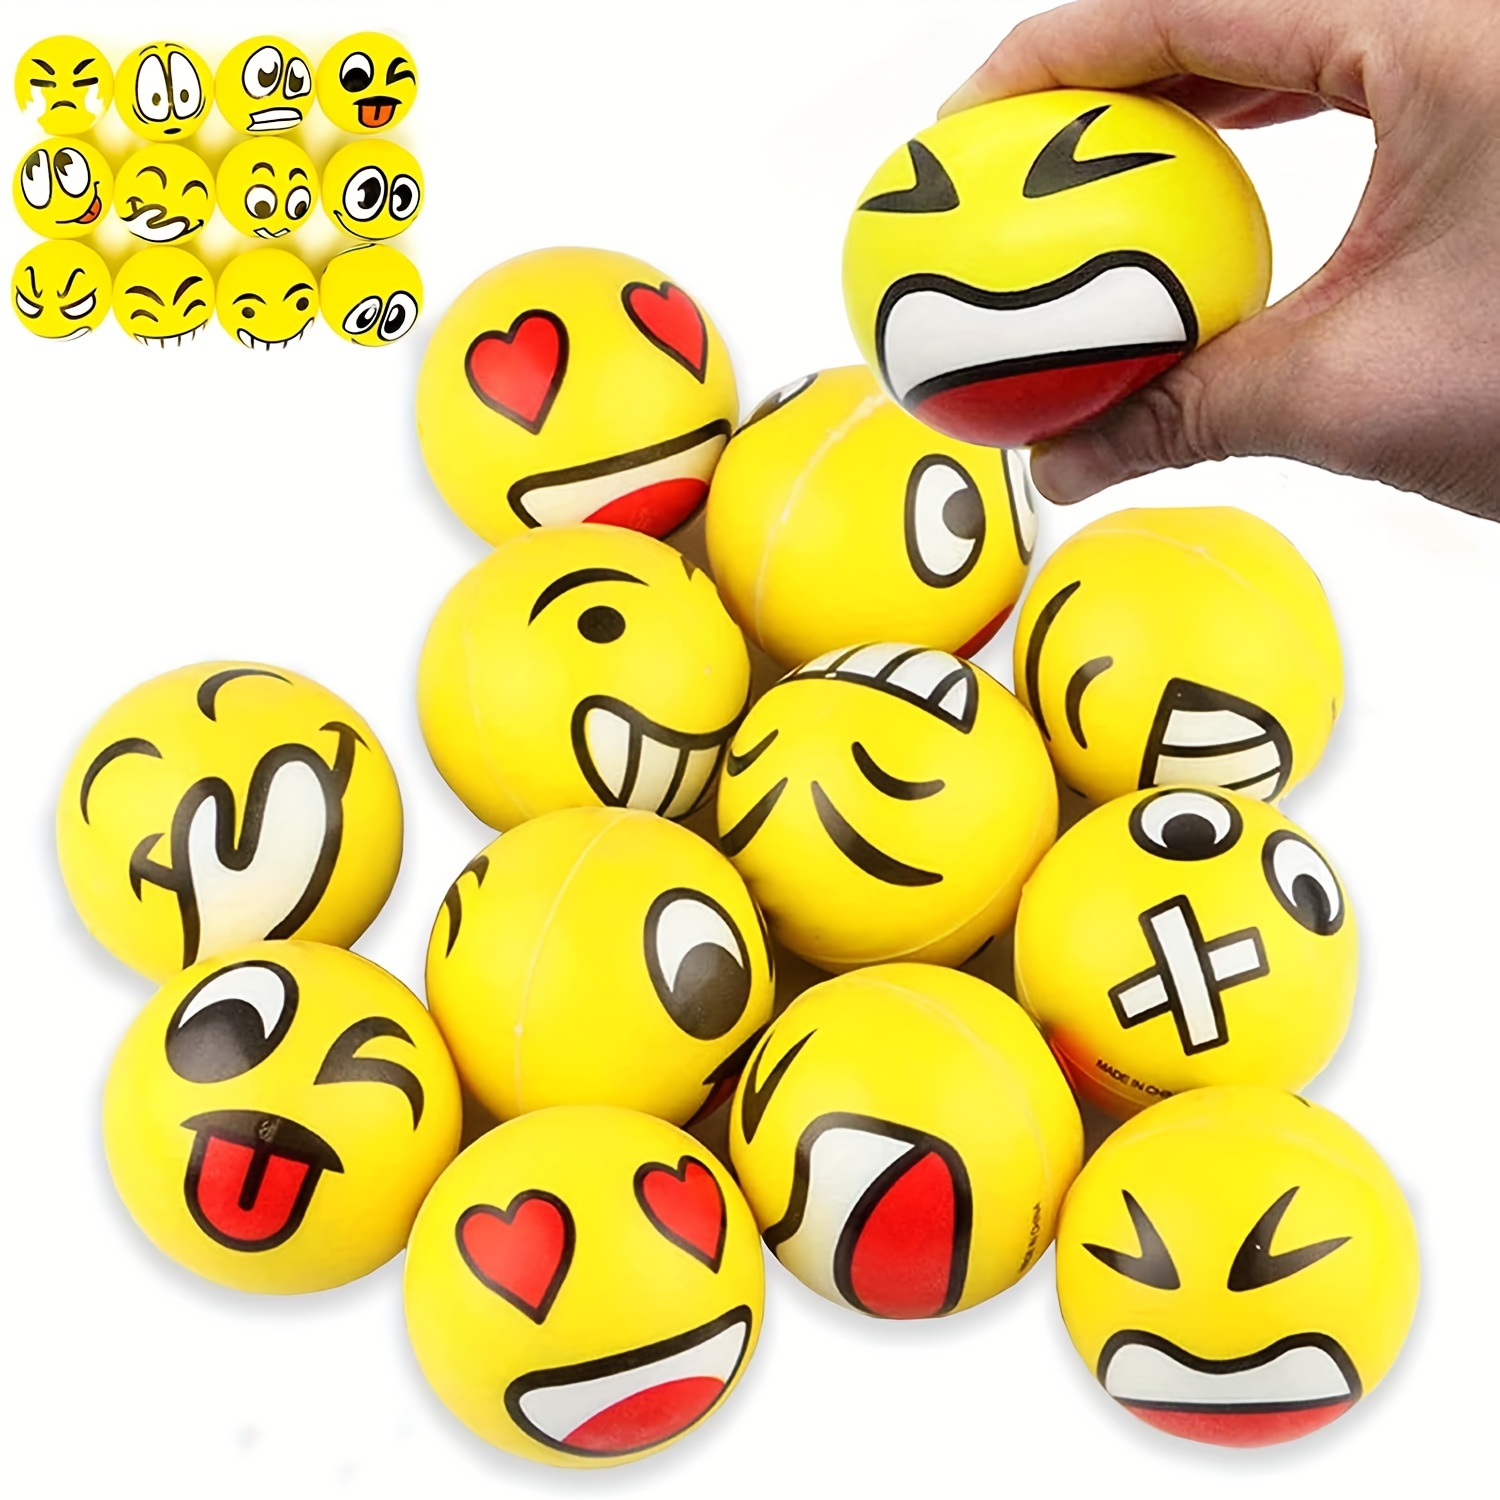 Happy Smile Face Anti Stress Relief Sponge Foam Ball Hand Wrist